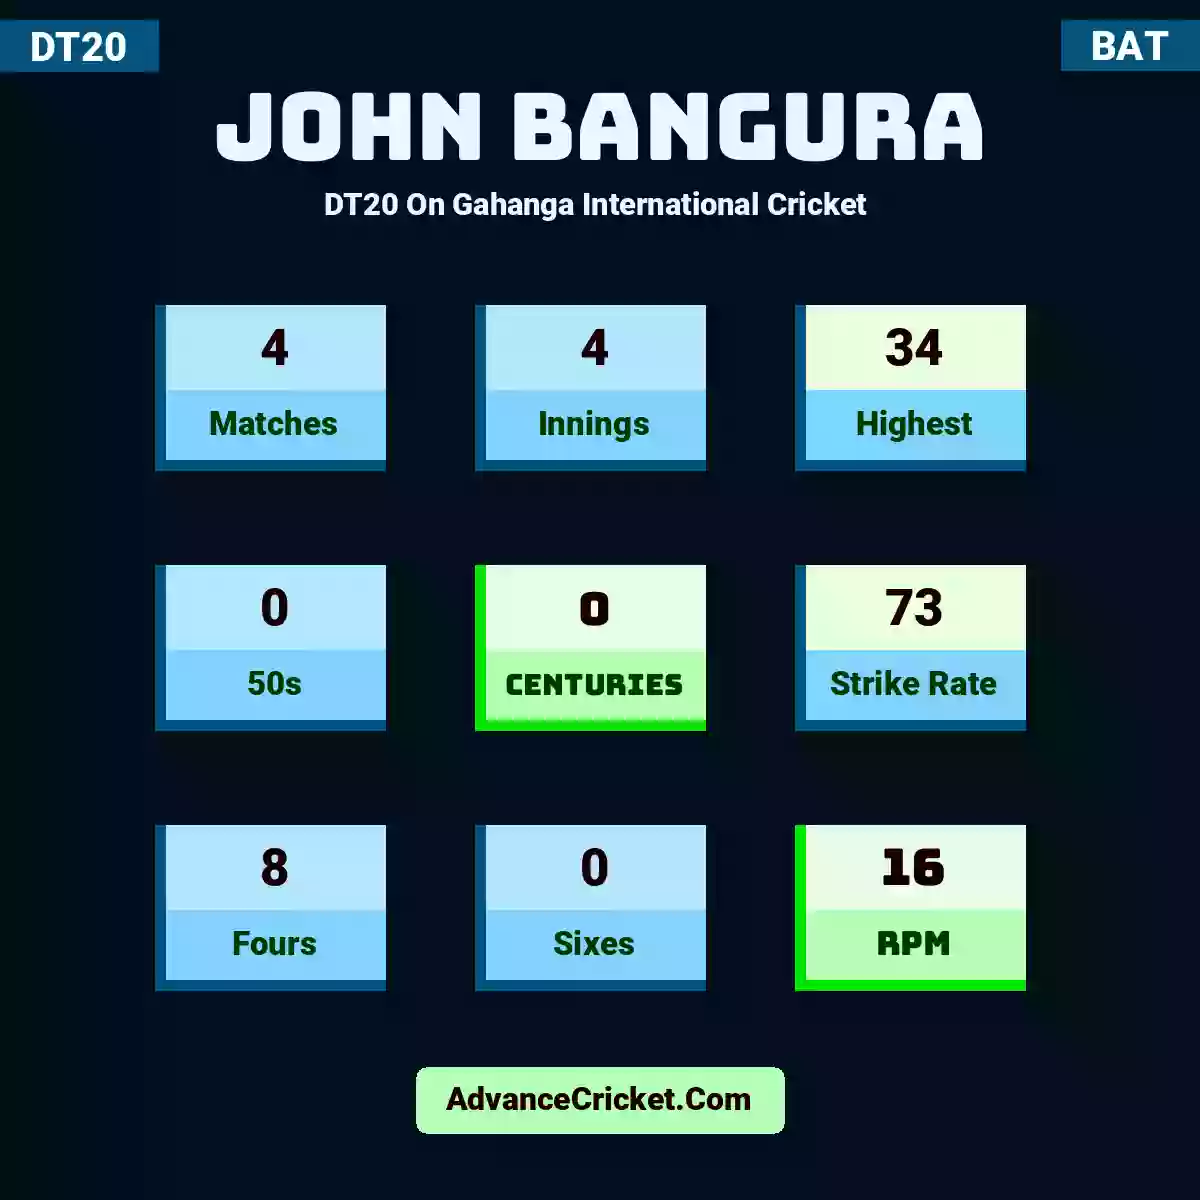 John Bangura DT20  On Gahanga International Cricket , John Bangura played 4 matches, scored 34 runs as highest, 0 half-centuries, and 0 centuries, with a strike rate of 73. J.Bangura hit 8 fours and 0 sixes, with an RPM of 16.